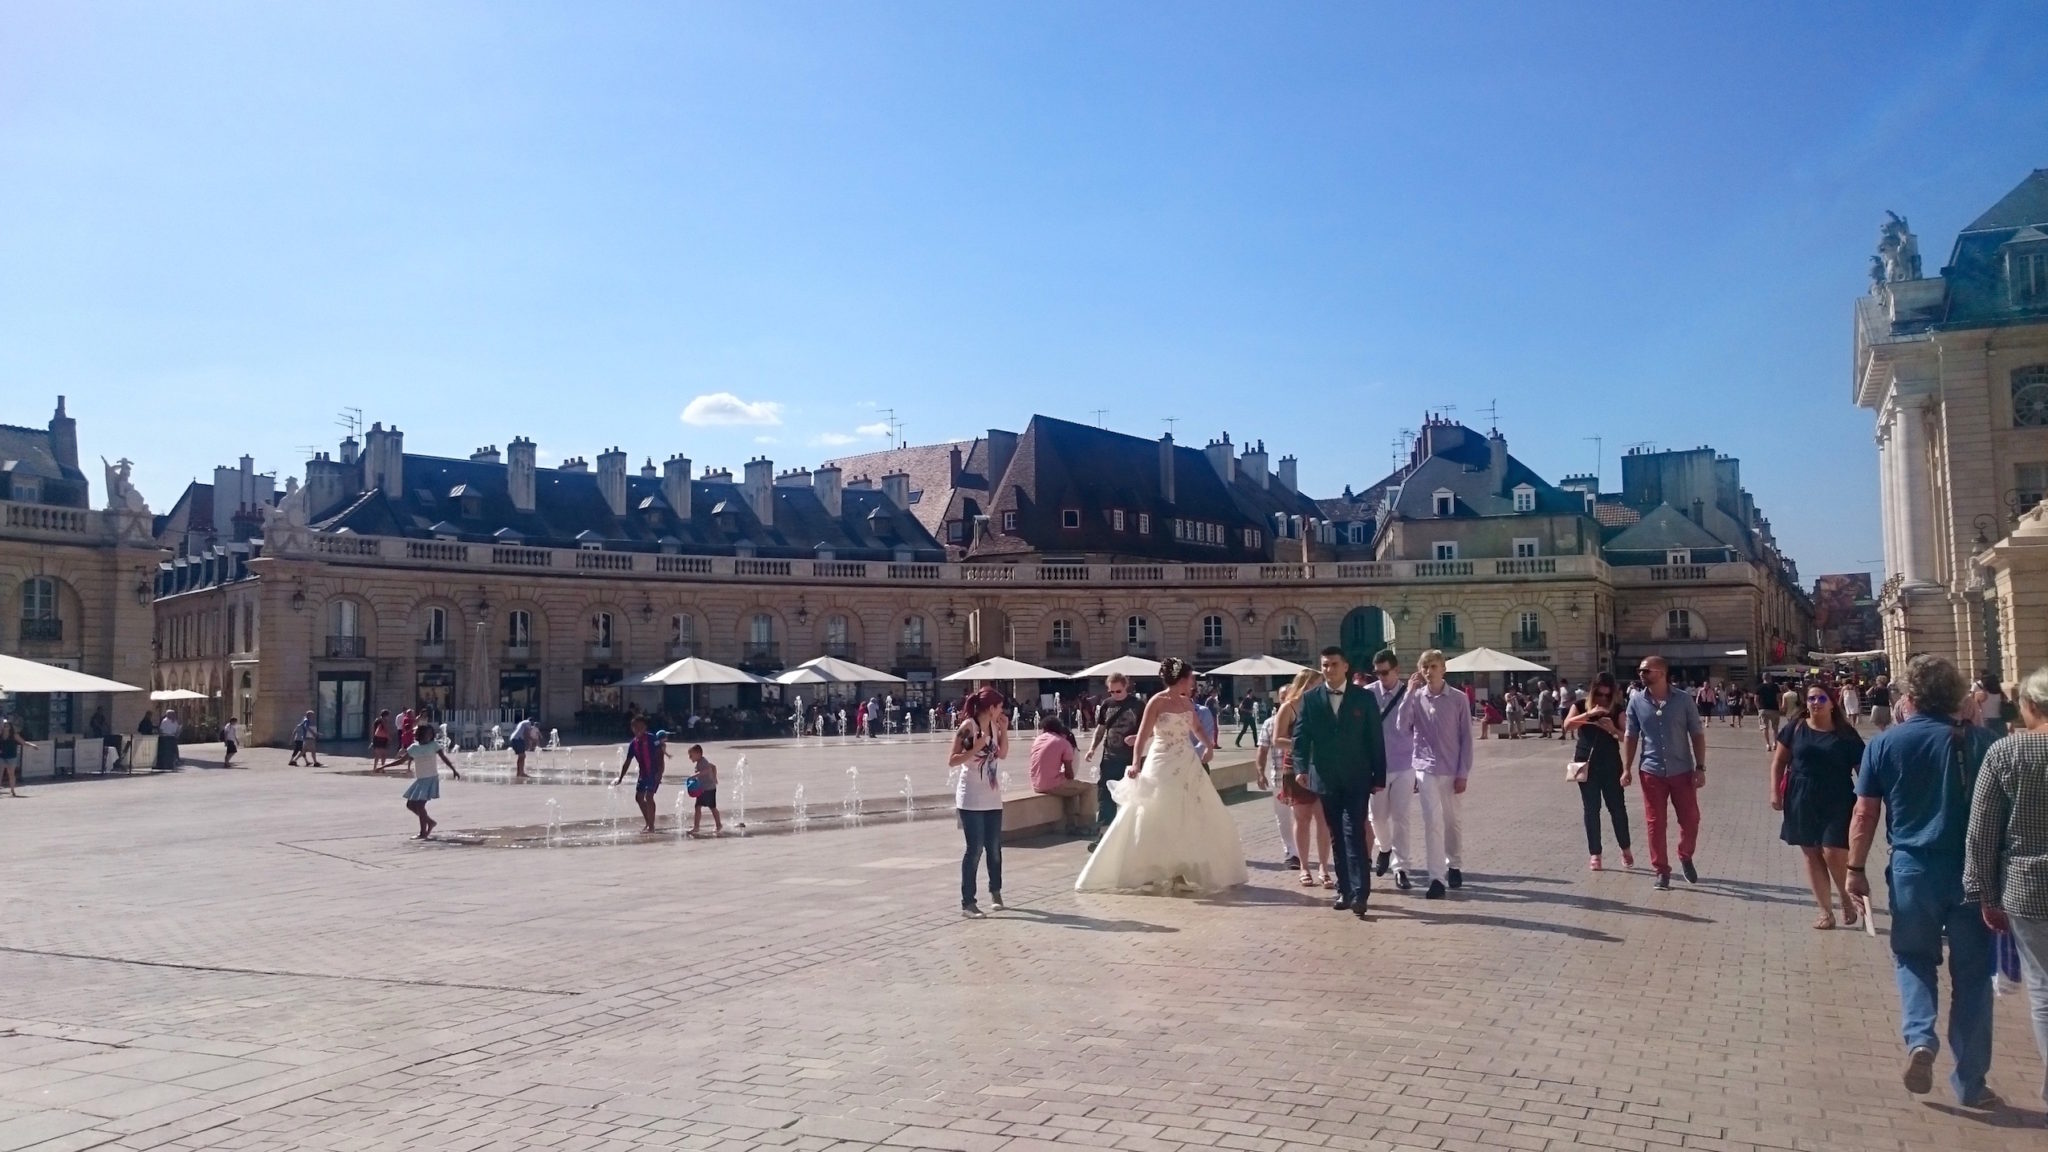 The stunning main square in Dijon - Place de la Libération